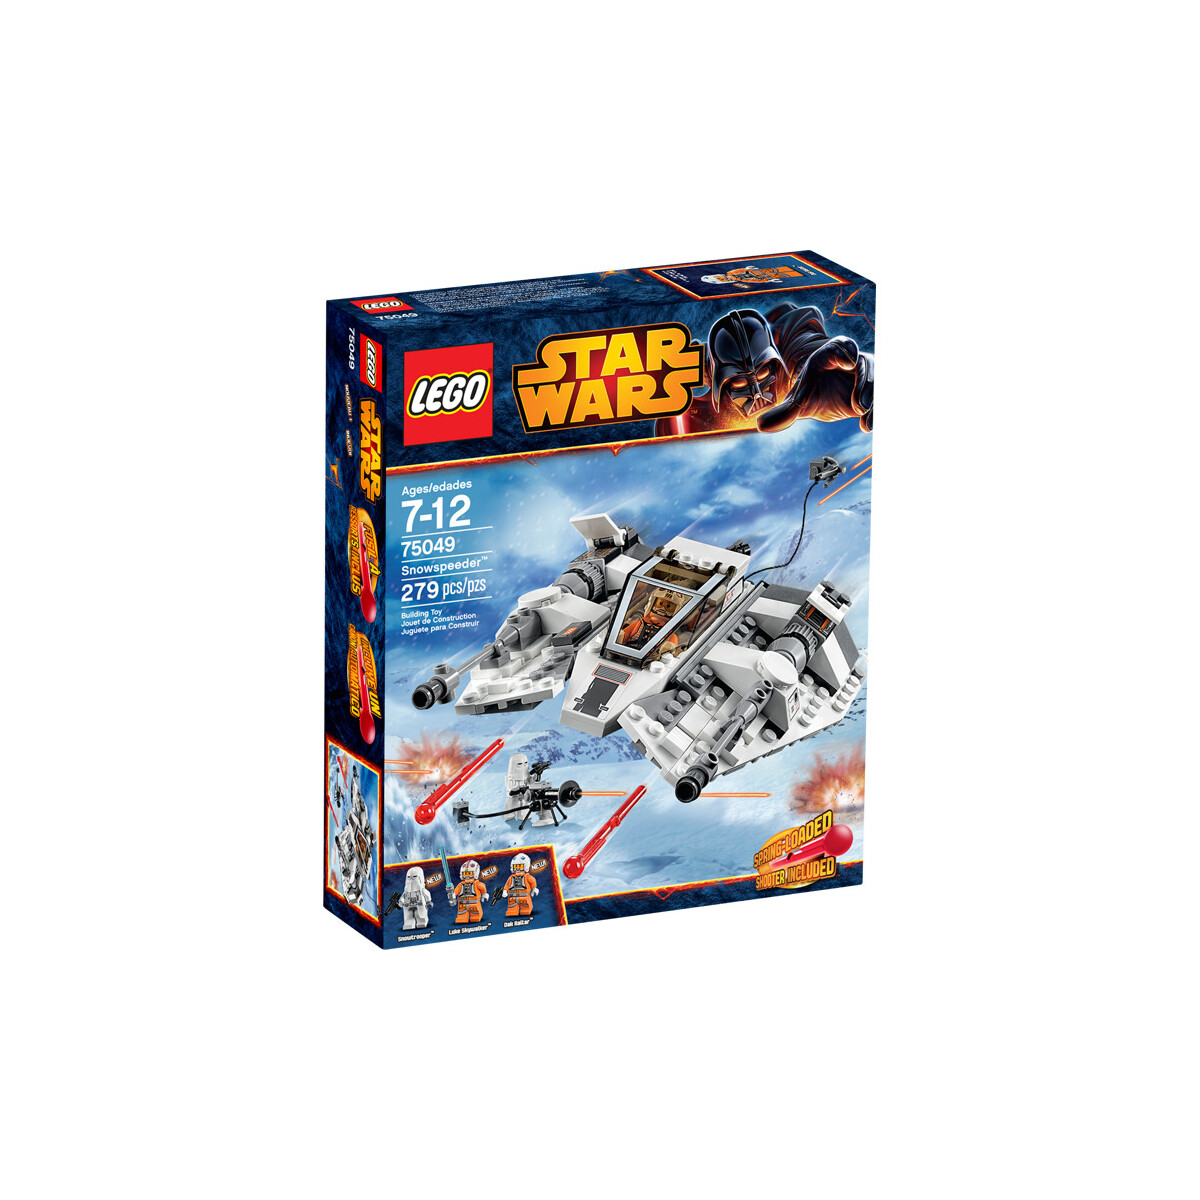 LEGO® Star Wars™ 75049 - Snowspeeder™ Shopping-Stop.de, 199,90 €